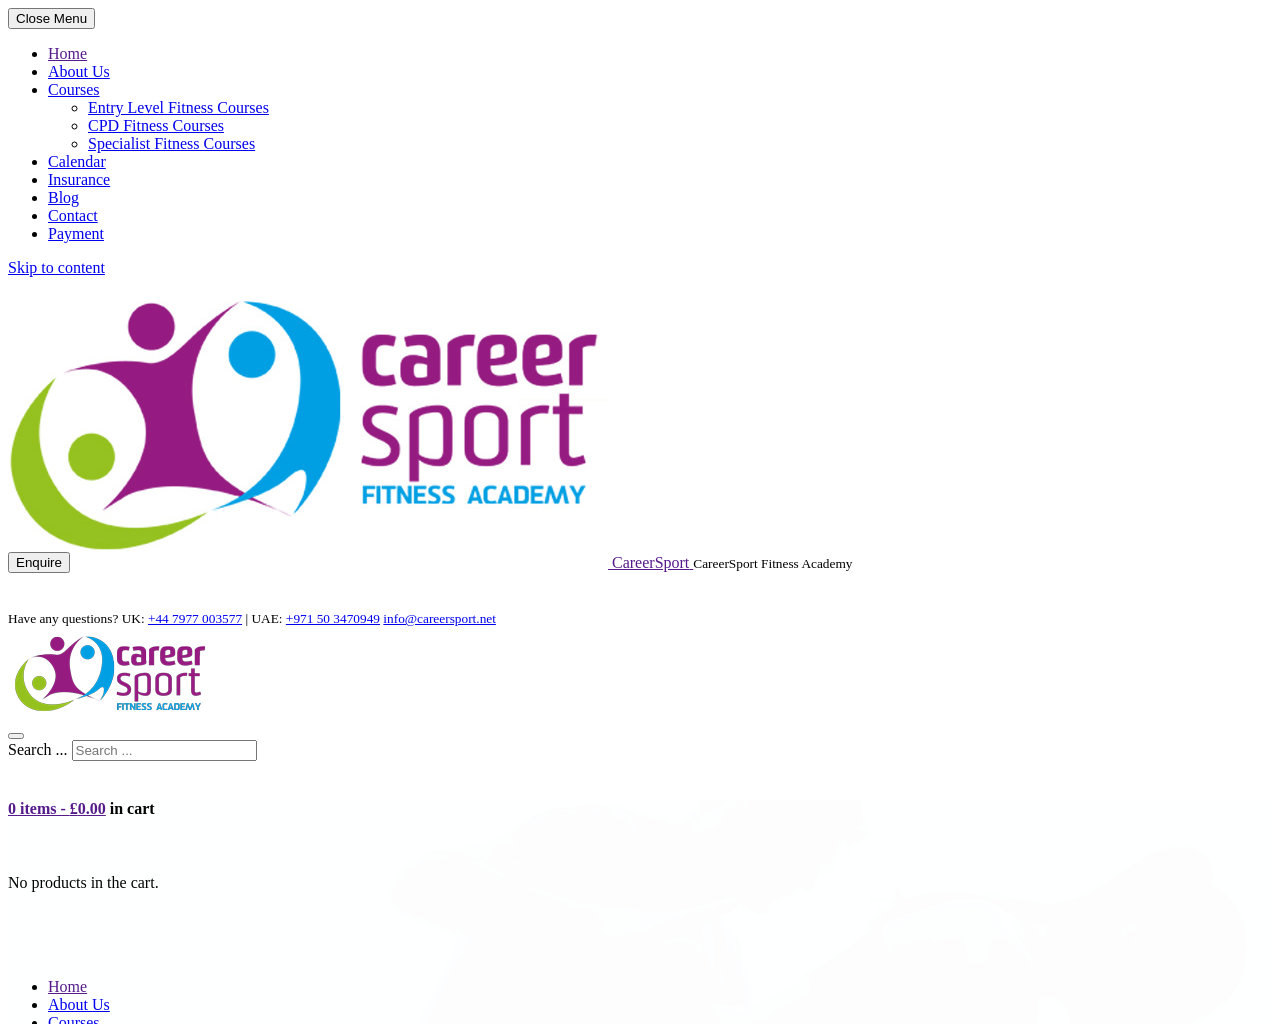 careersport.net